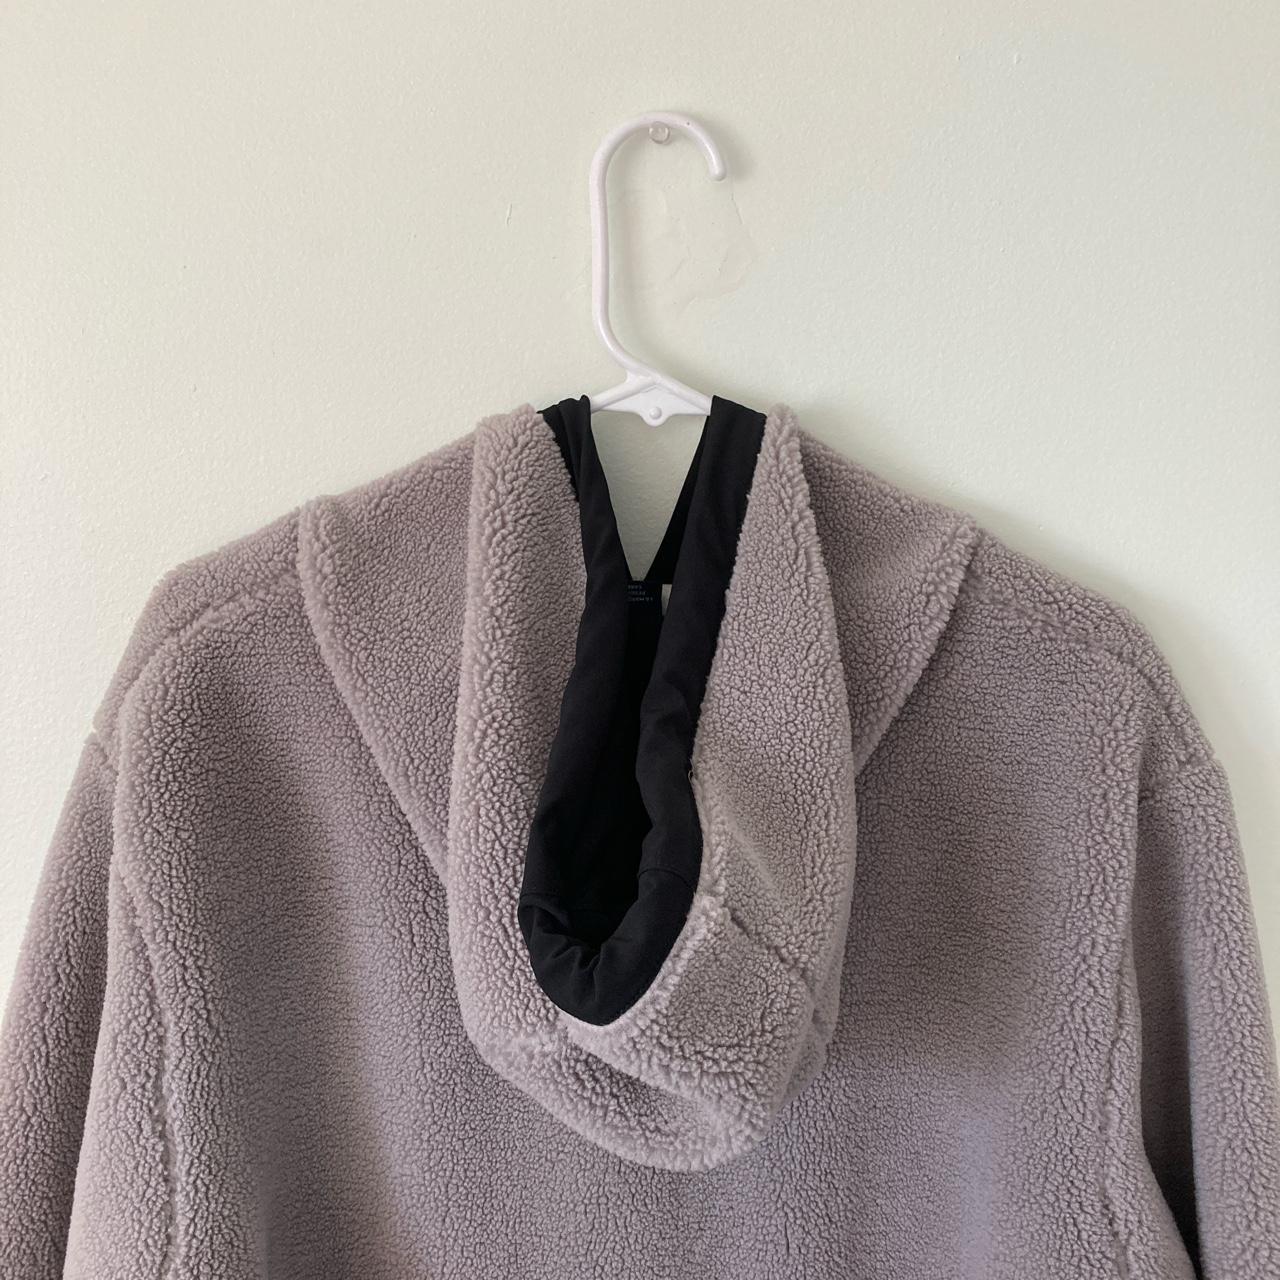 Product Image 4 - Helas - Fleece pullover.
Size -